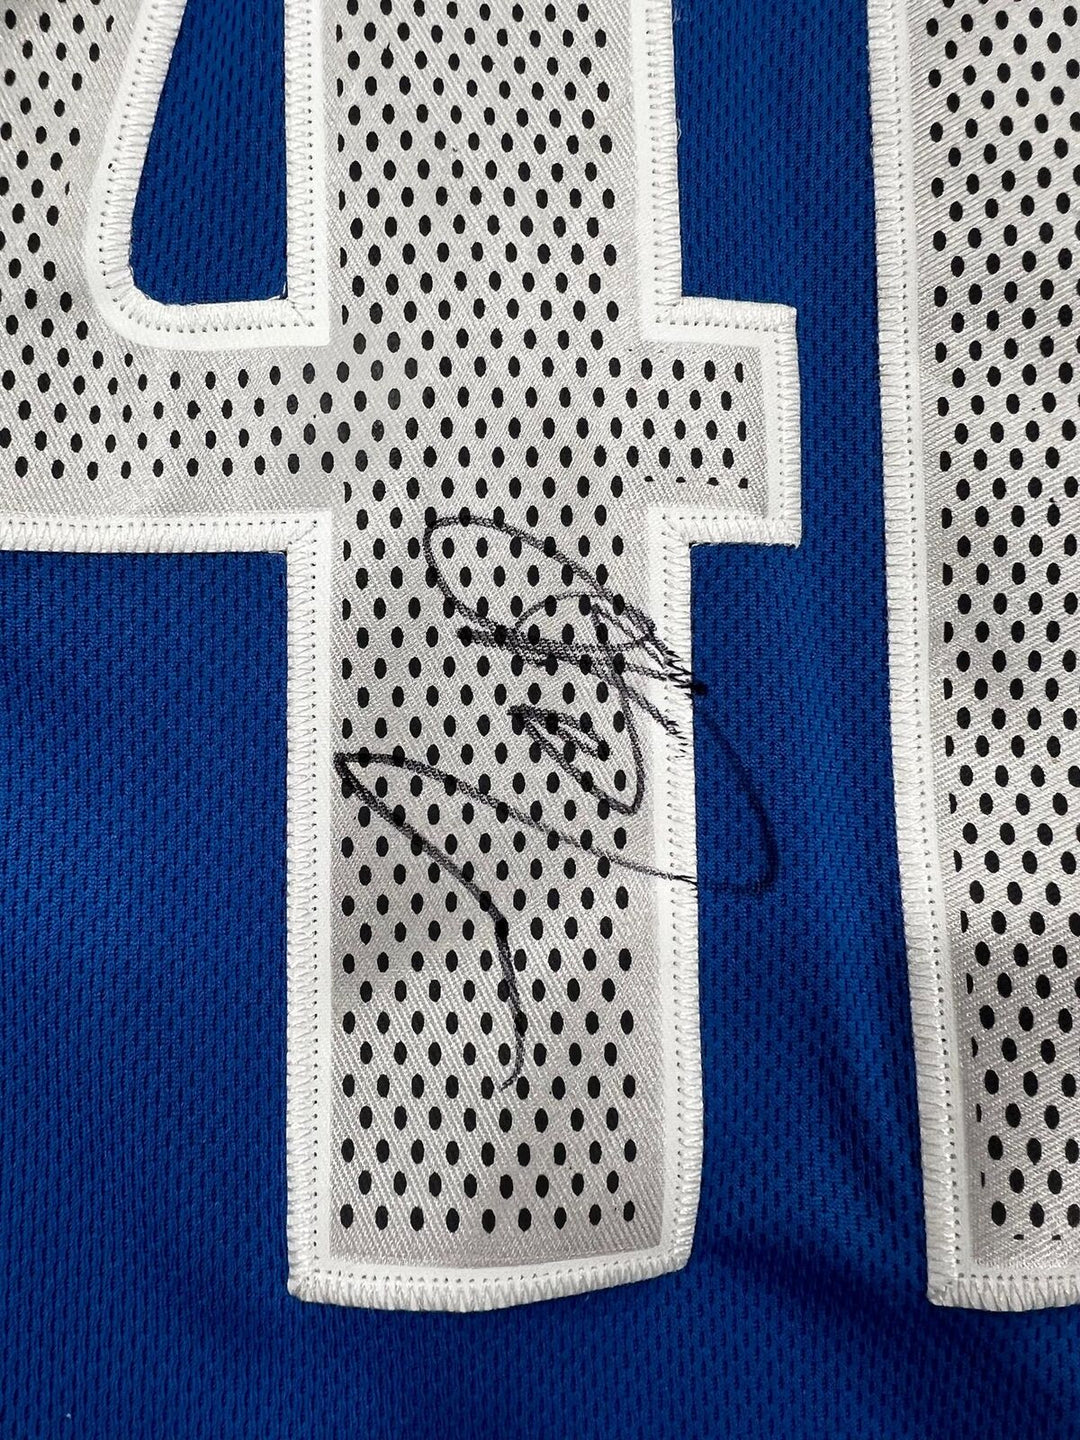 Dirk Nowitzki signed jersey PSA/DNA Dallas Mavericks Autographed Image 2